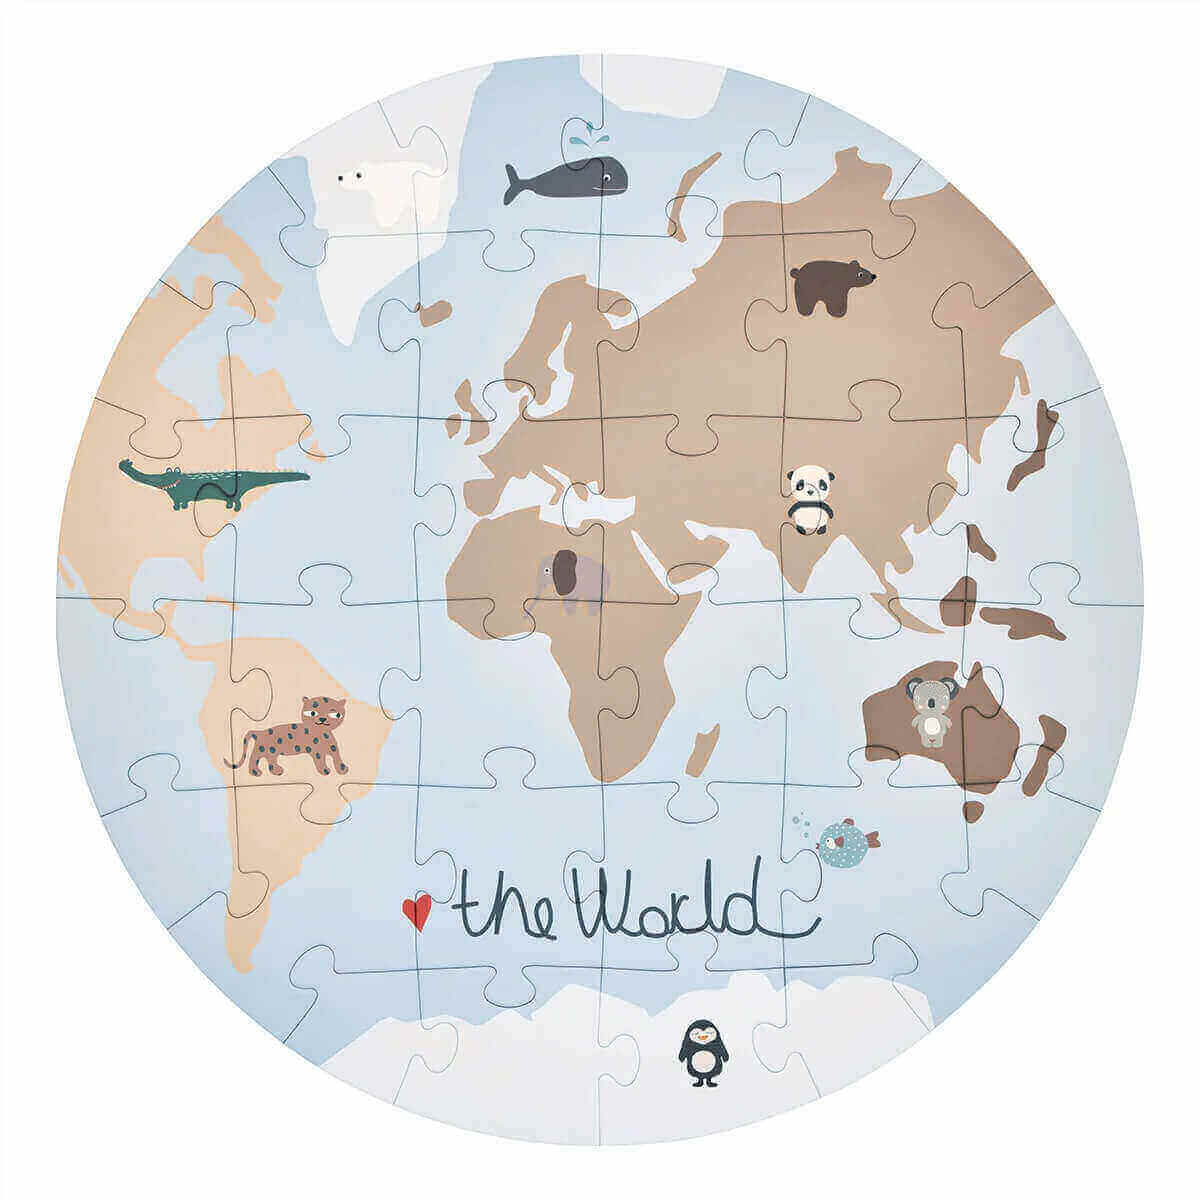 Kinderpuzzle "The World"